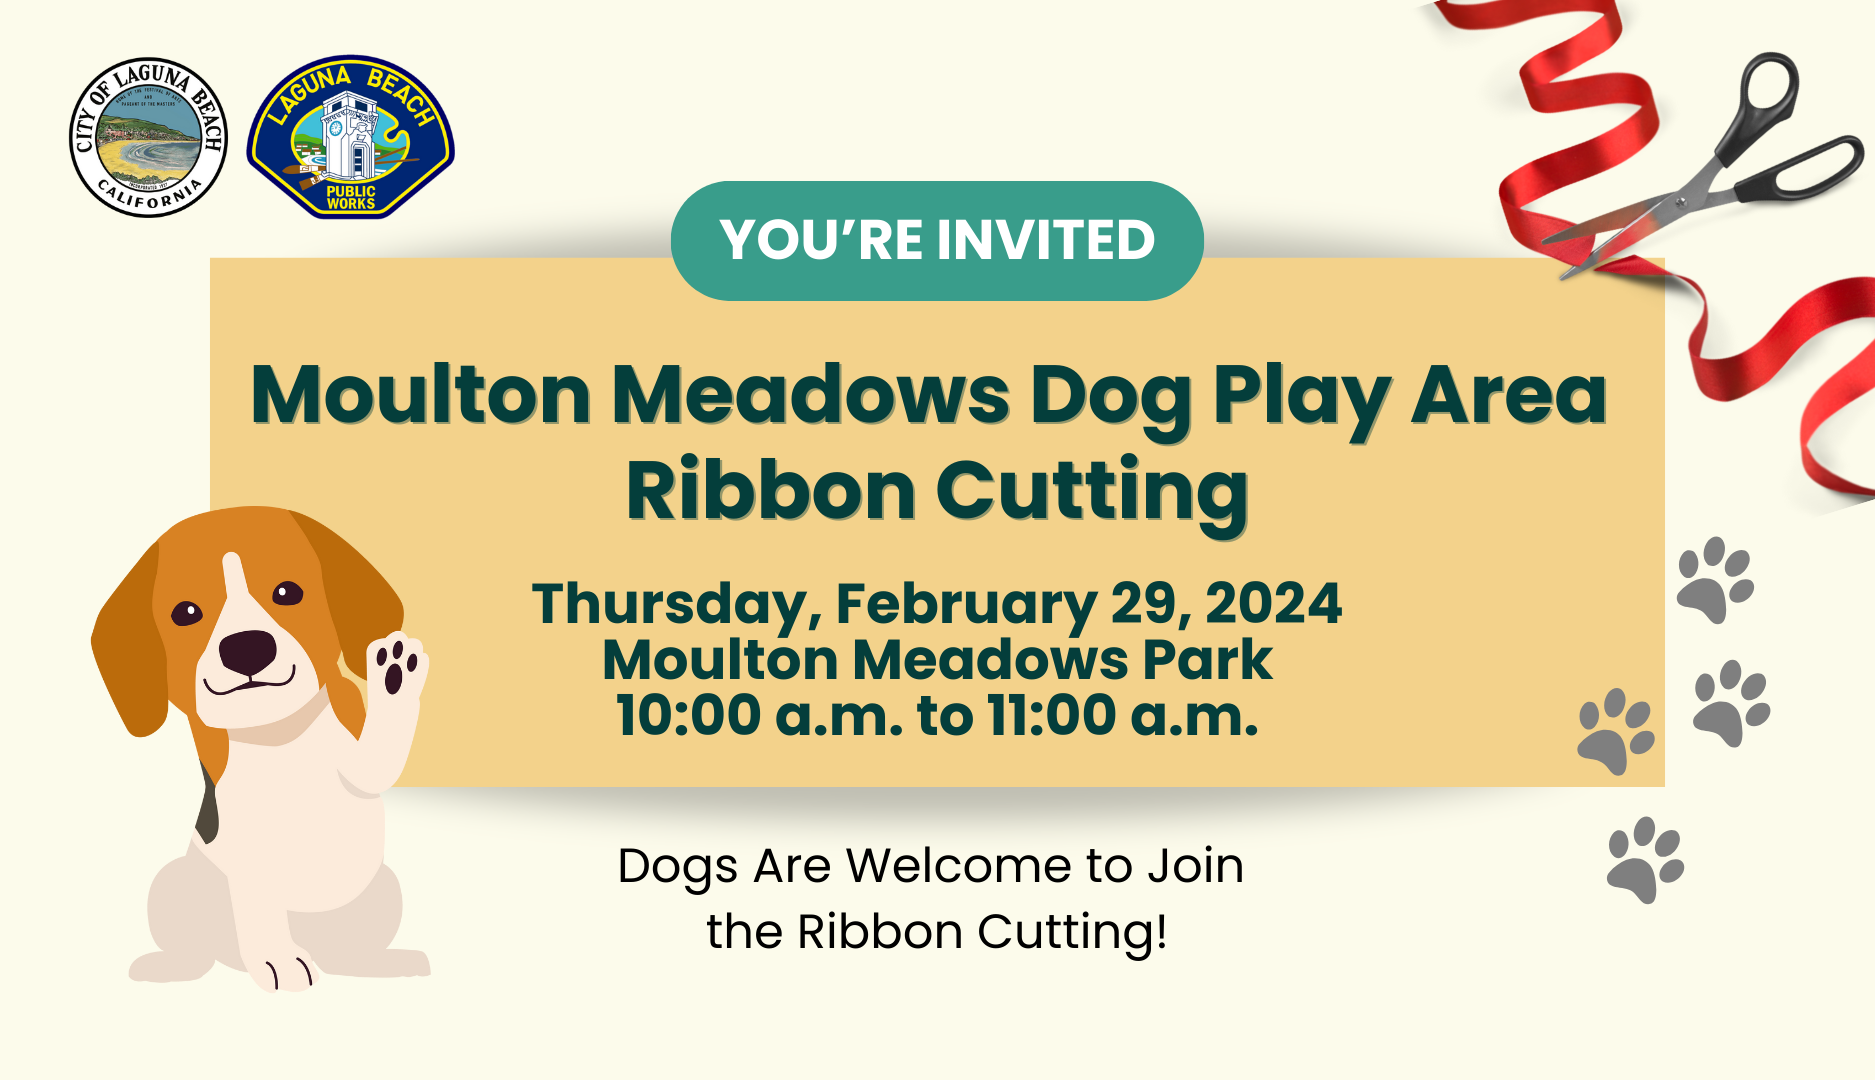 Moulton Meadows Dog Play Area Ribbon Cutting Flyer - Final